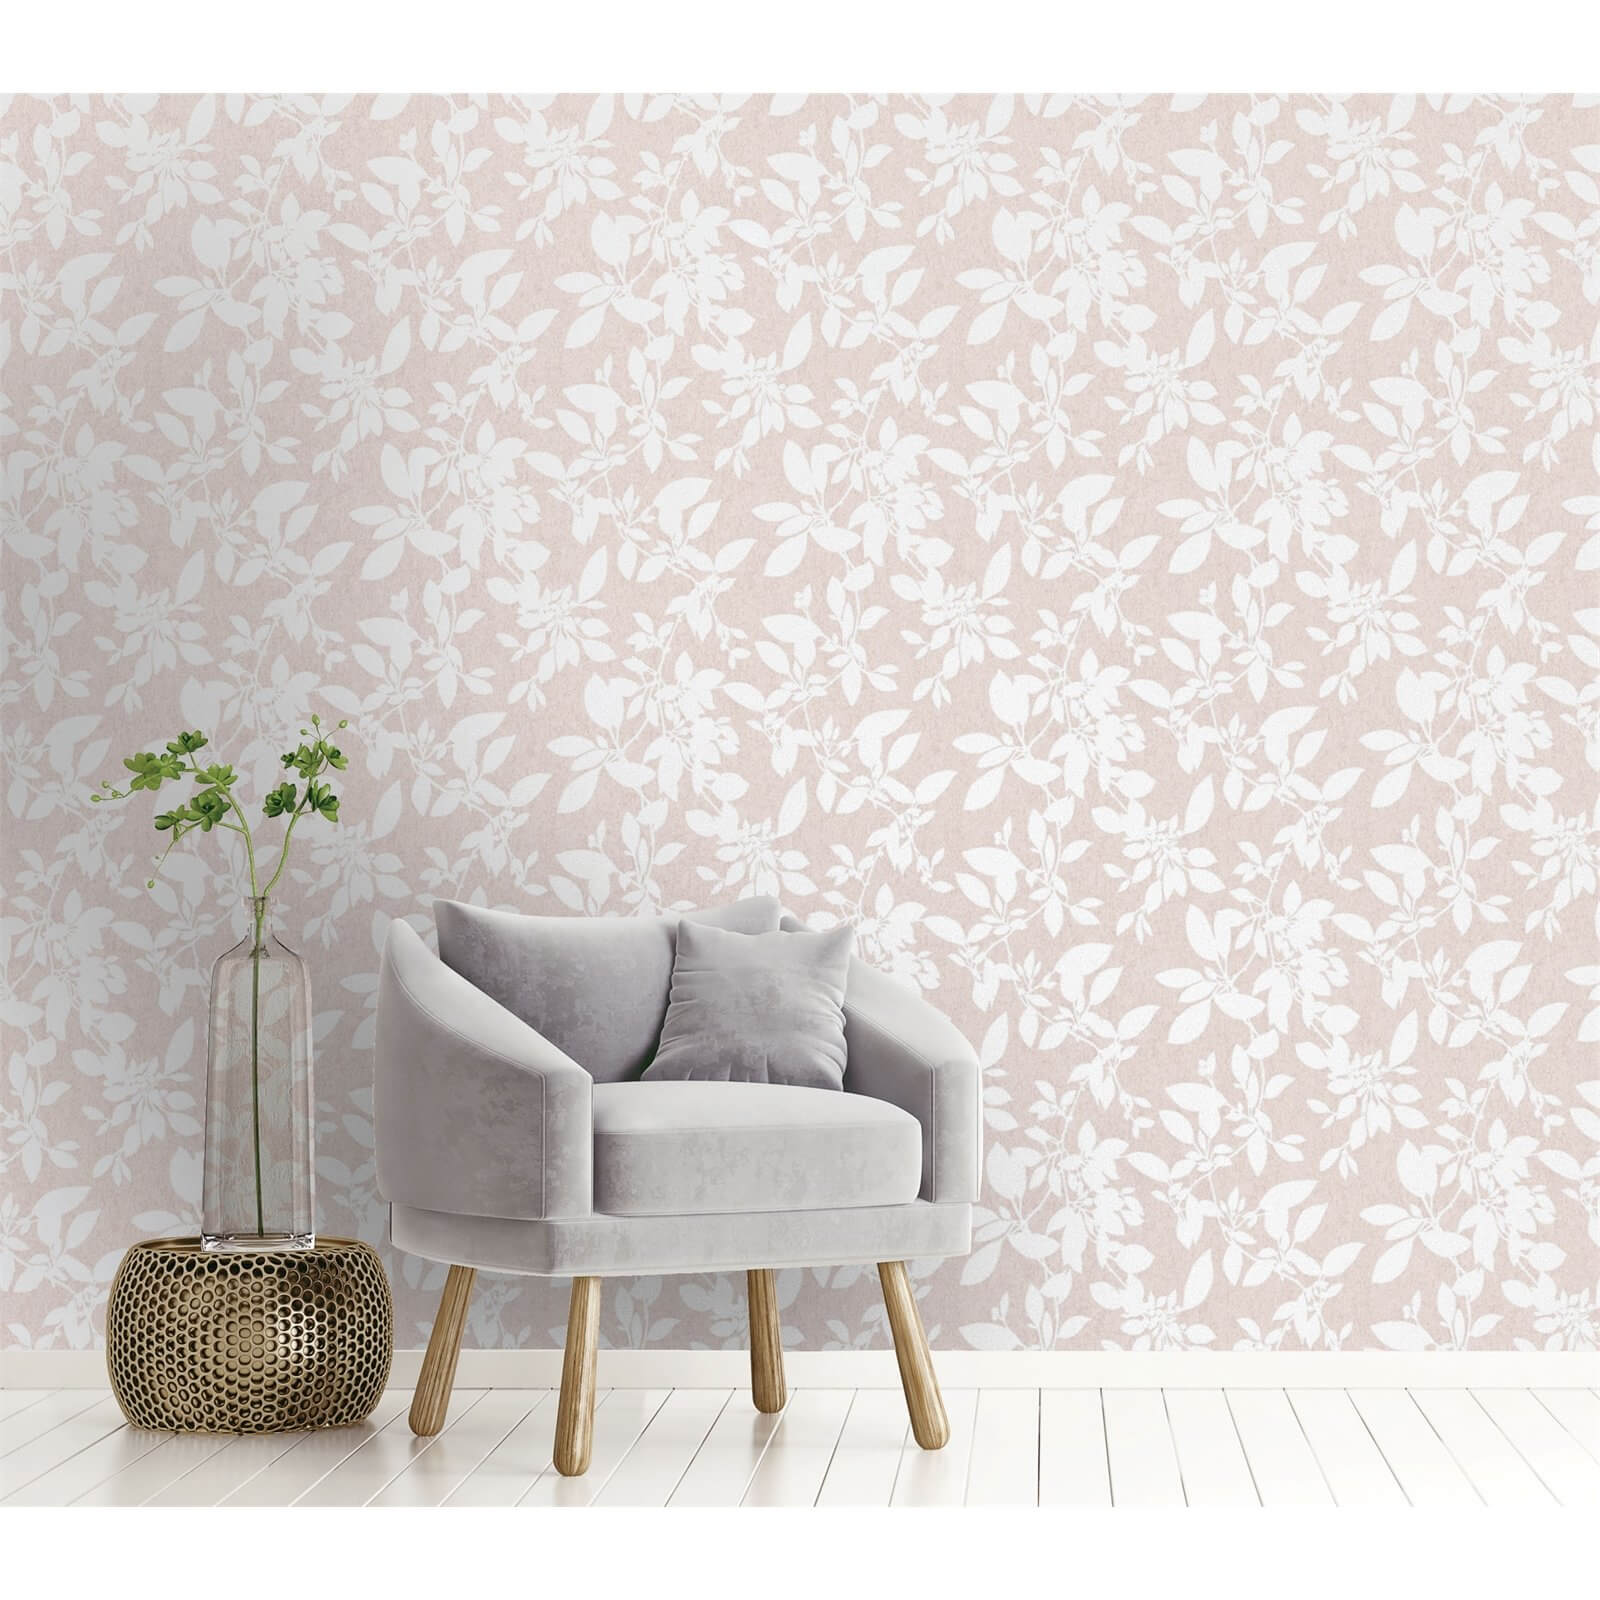 Holden Decor Linden Floral Textured Metallic Glitter Blush Pink Wallpaper